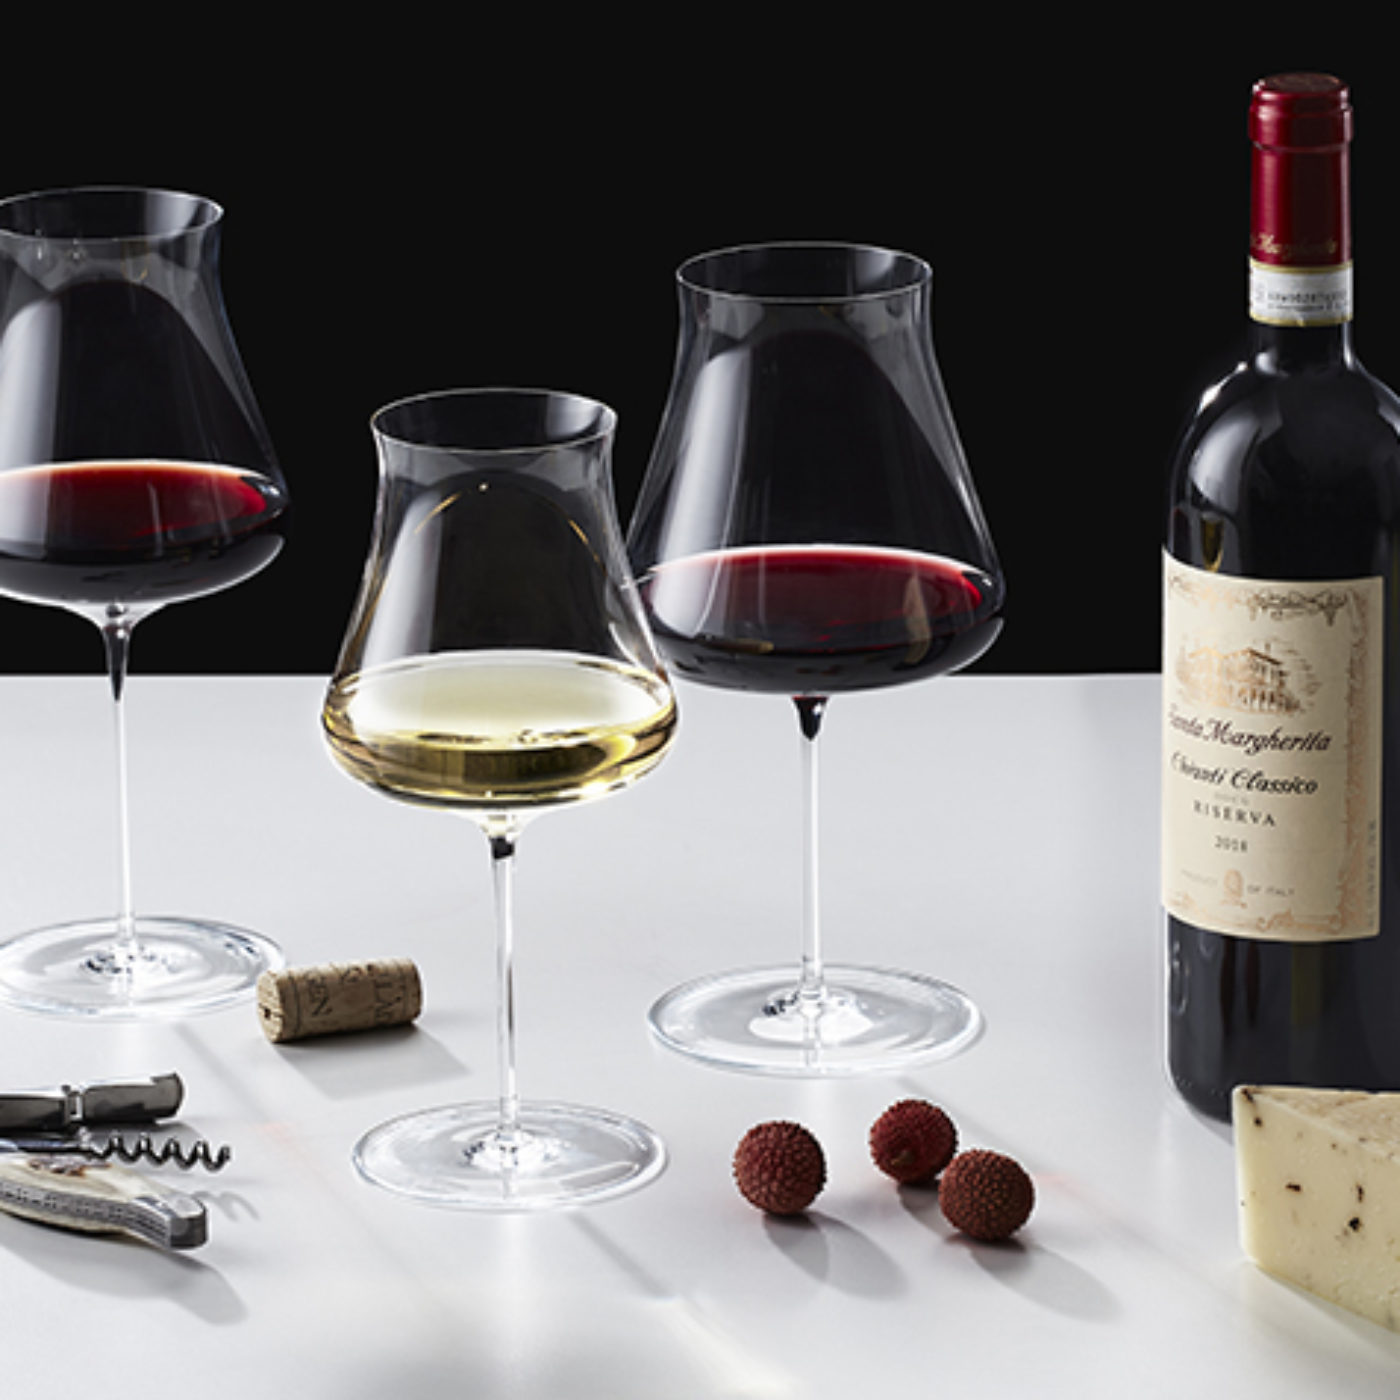 7 oz. Wine Glass - Standard or Short Stem - Item #W7